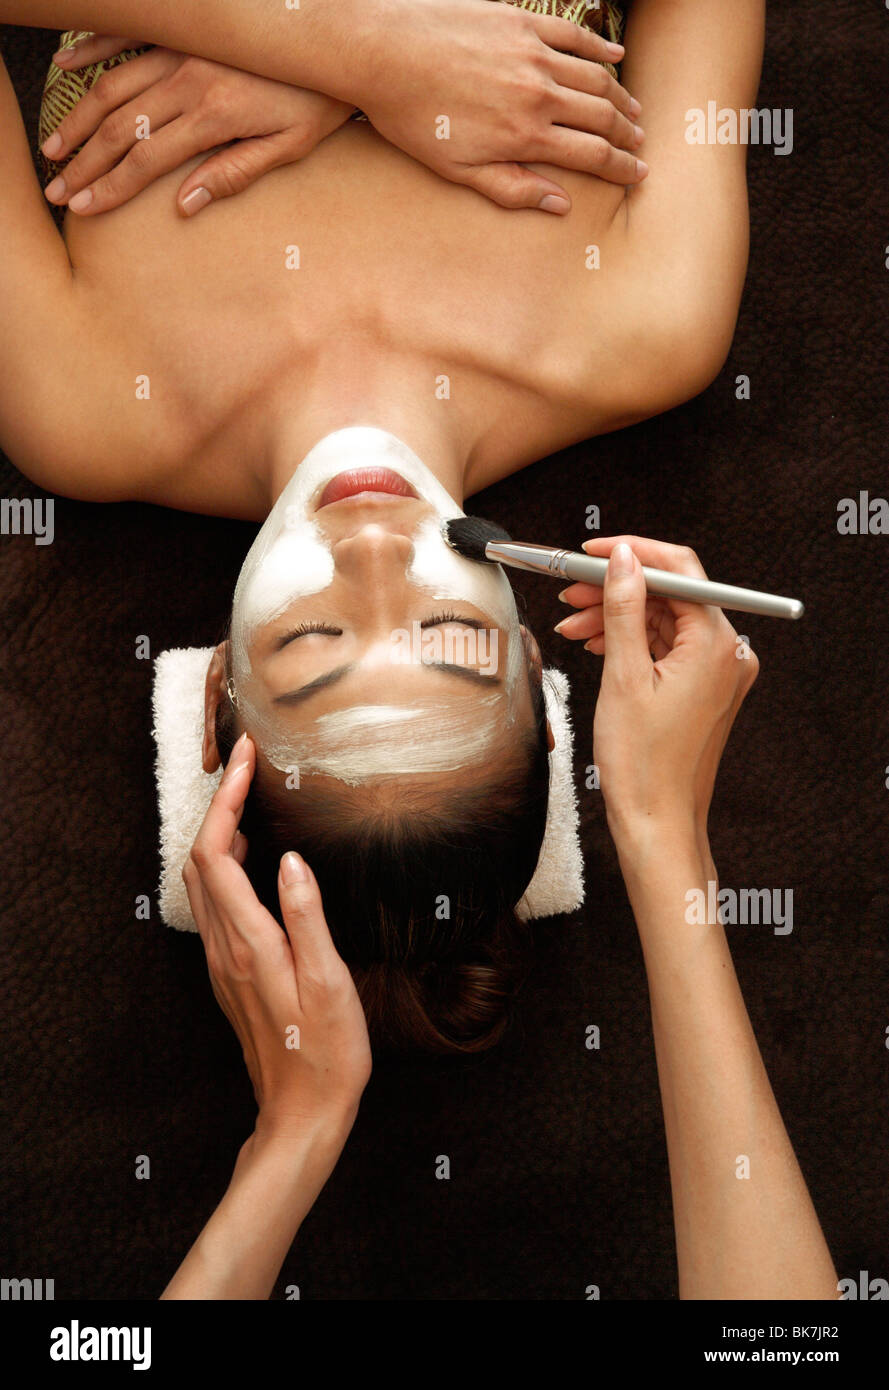 Application of facial mask for facial treatment Stock Photo